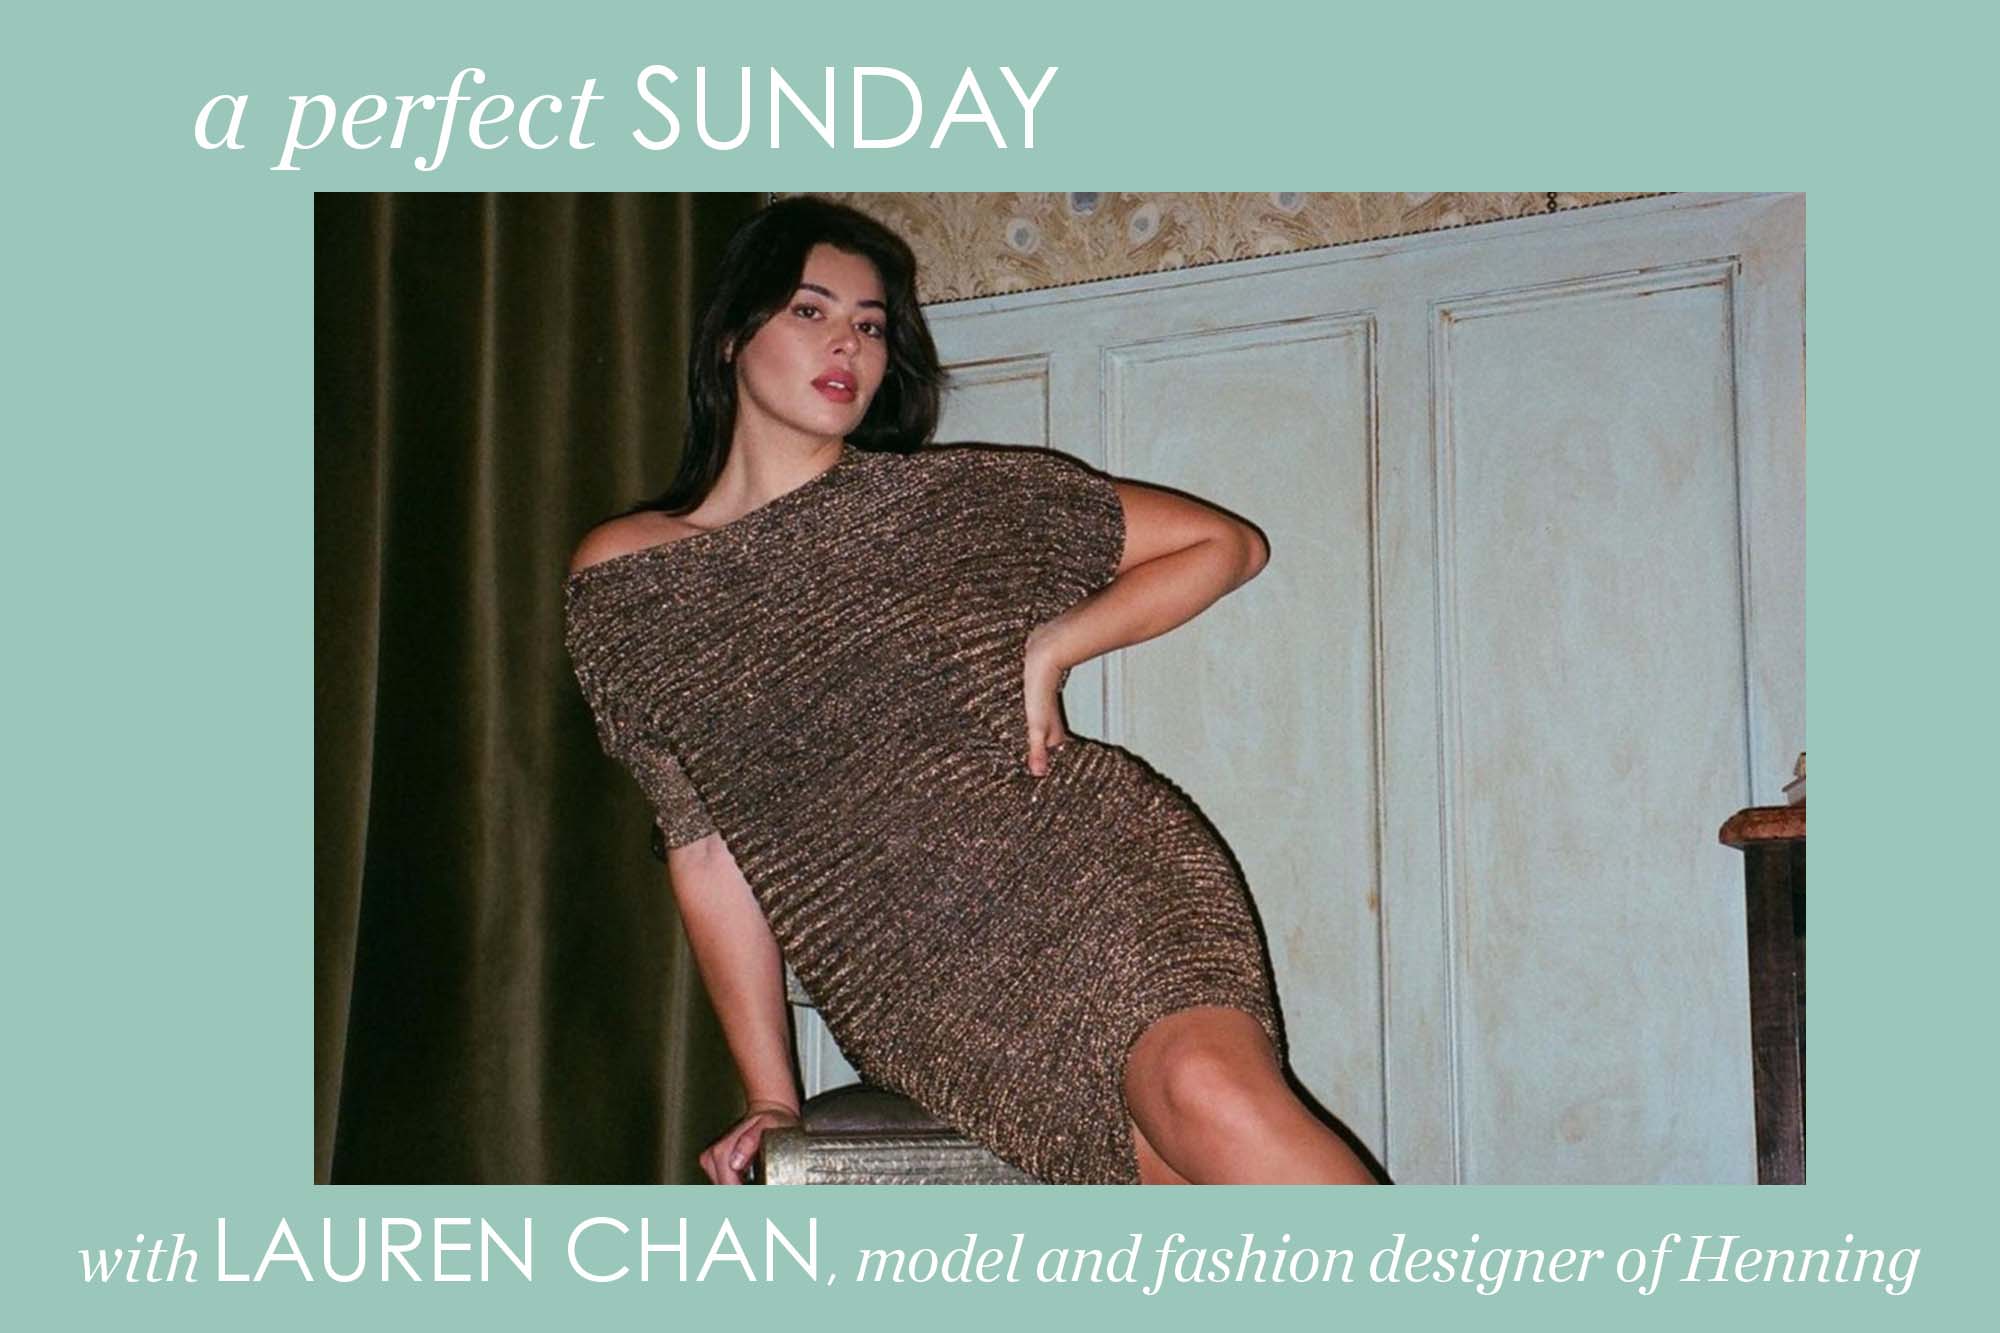 Portrait of model and fashion designer Lauren Chan